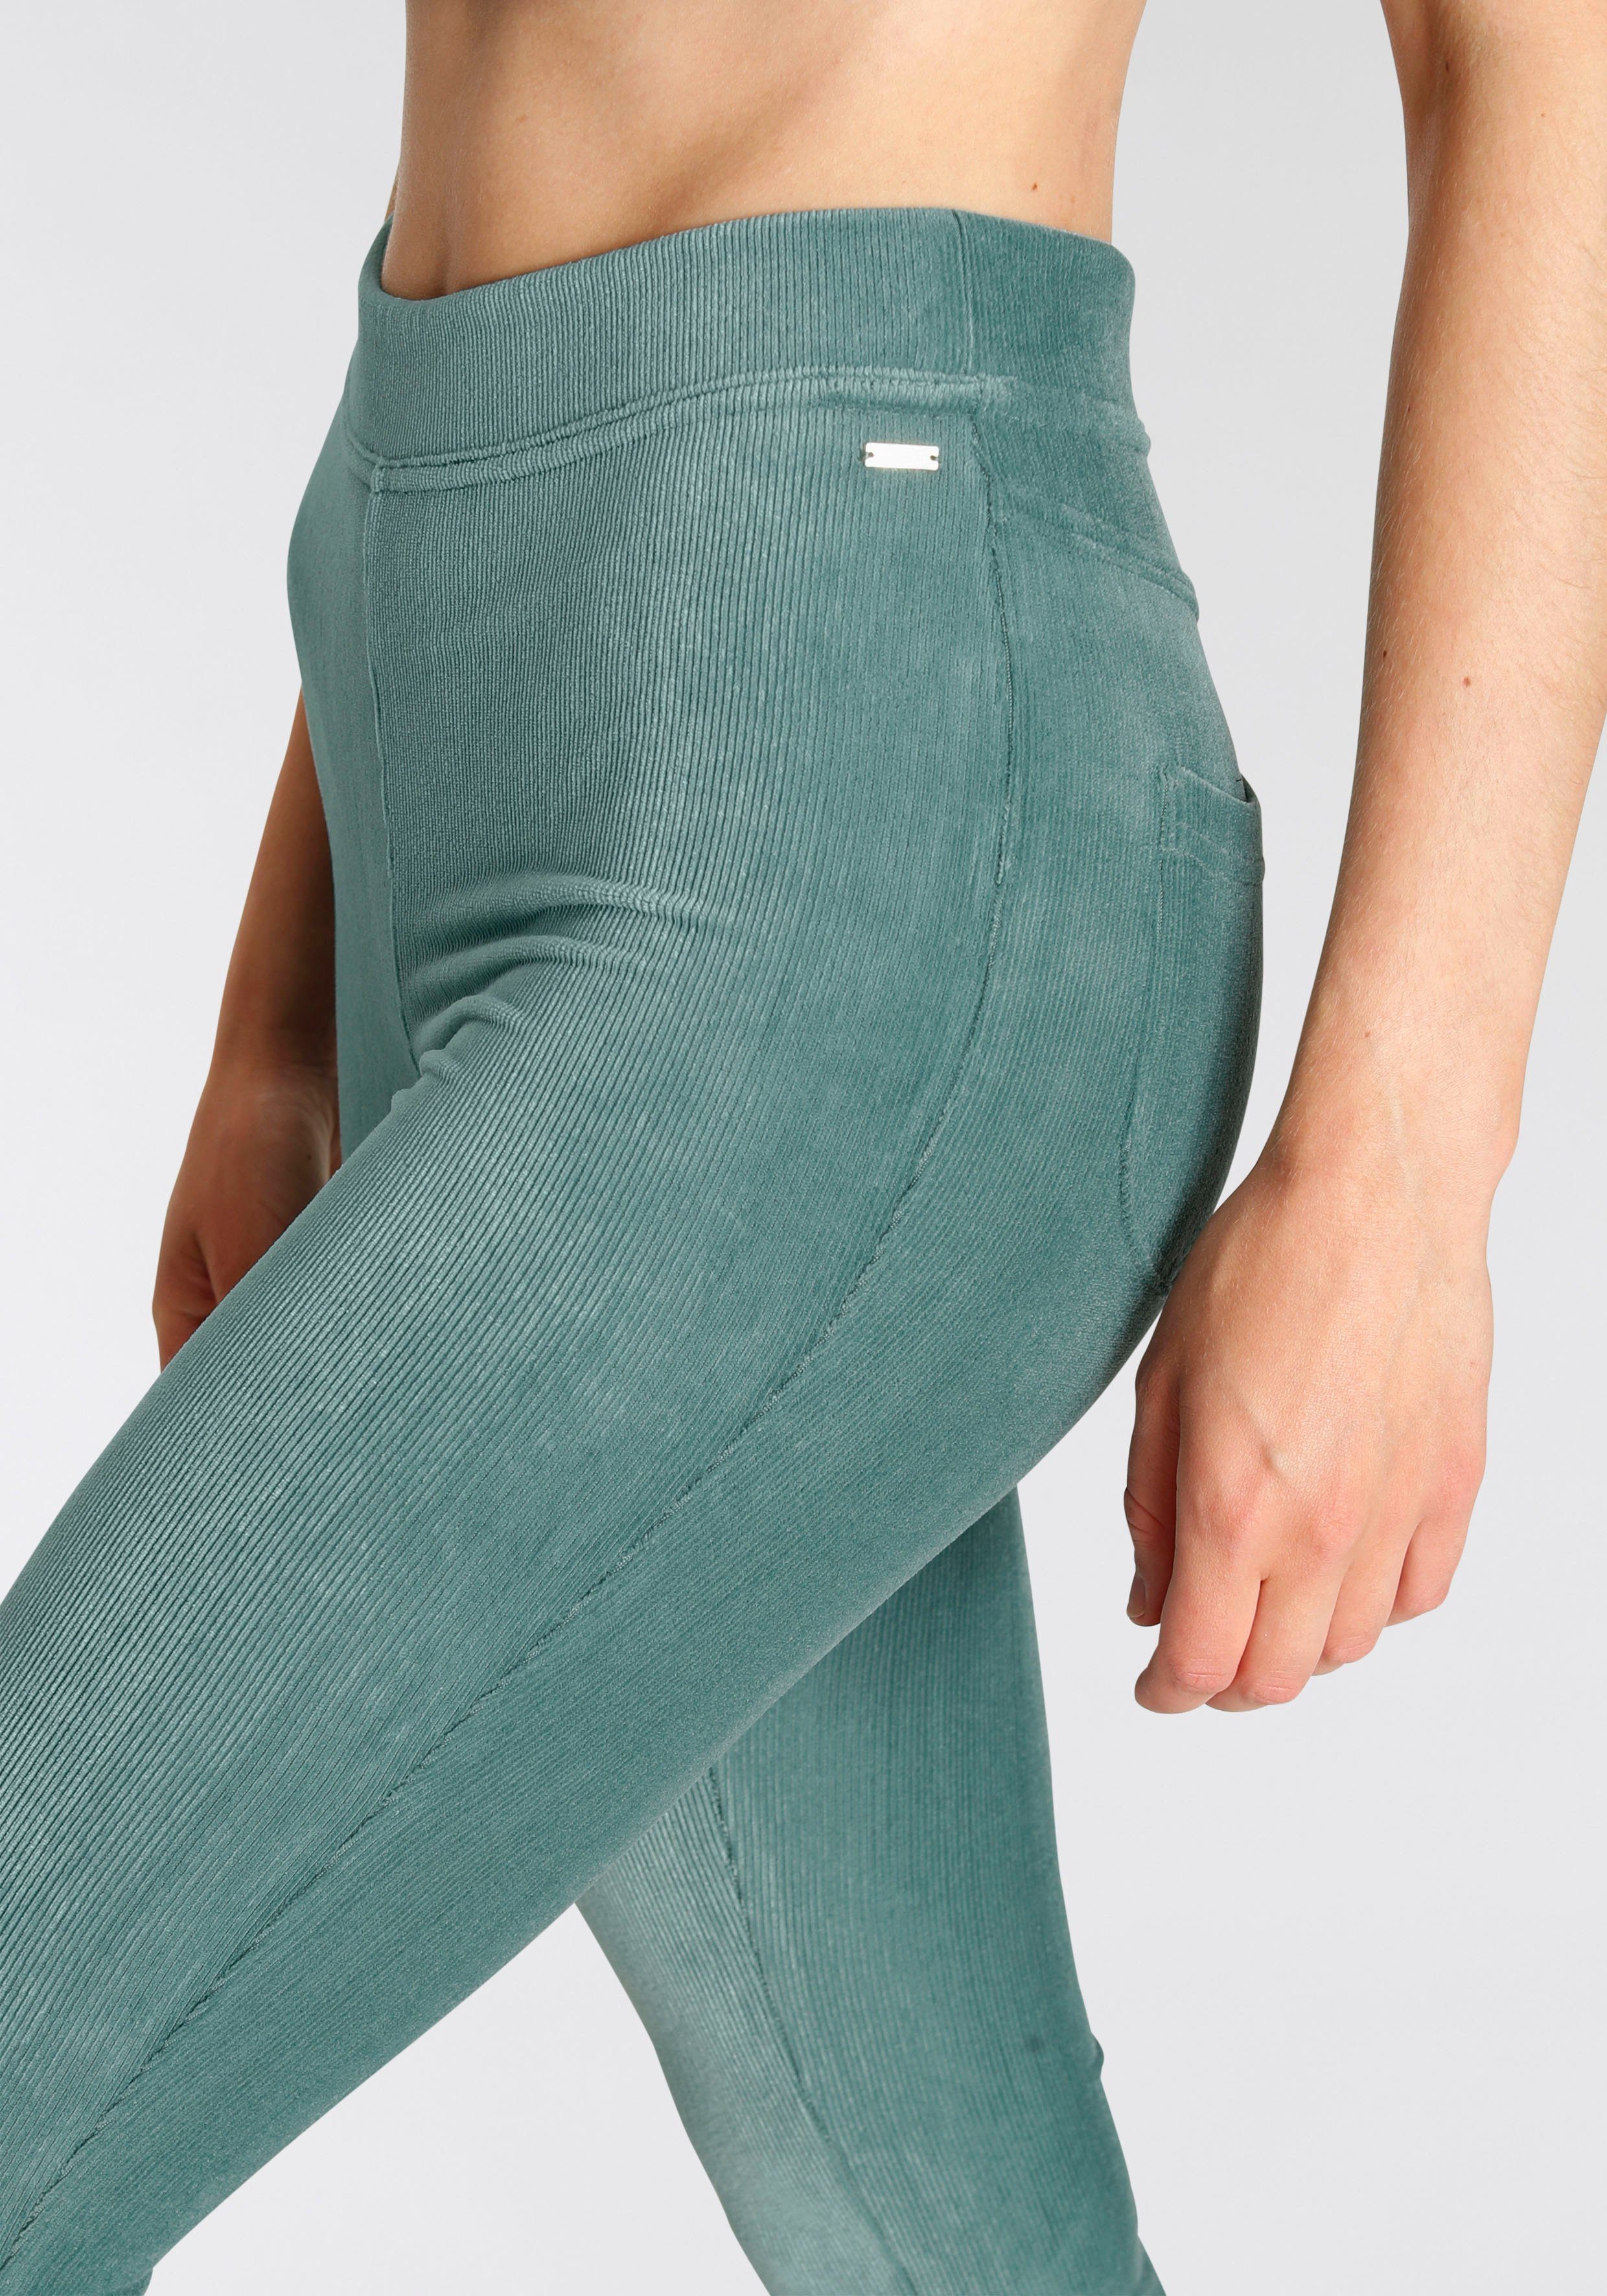 LASCANA Jazzpants aus petrol Loungewear Cord-Optik, Material weichem in